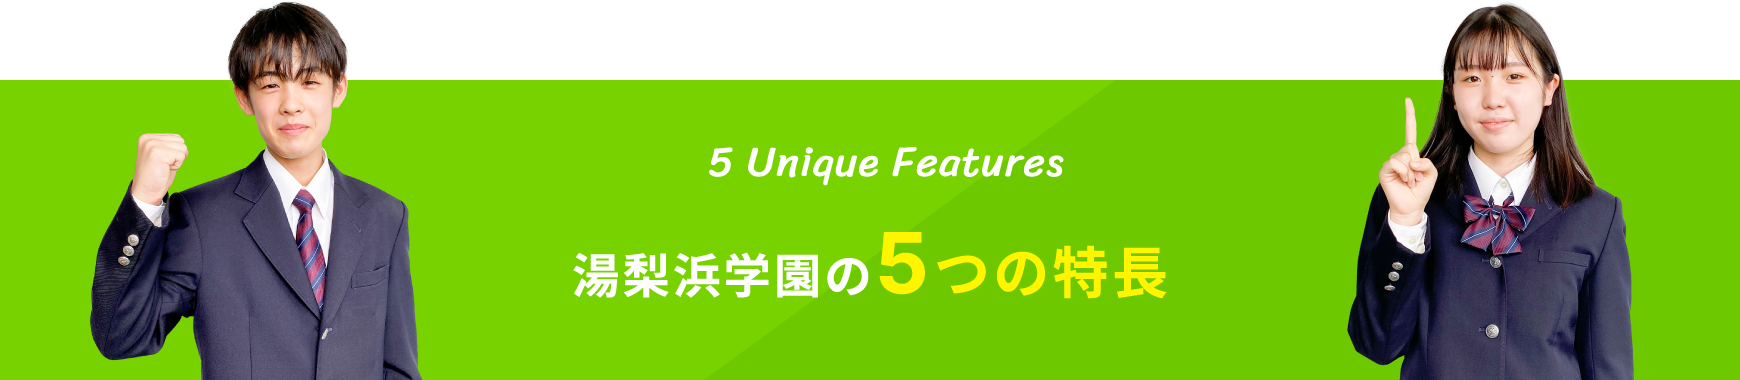 5 Unique Features 湯梨浜学園の5つの特徴